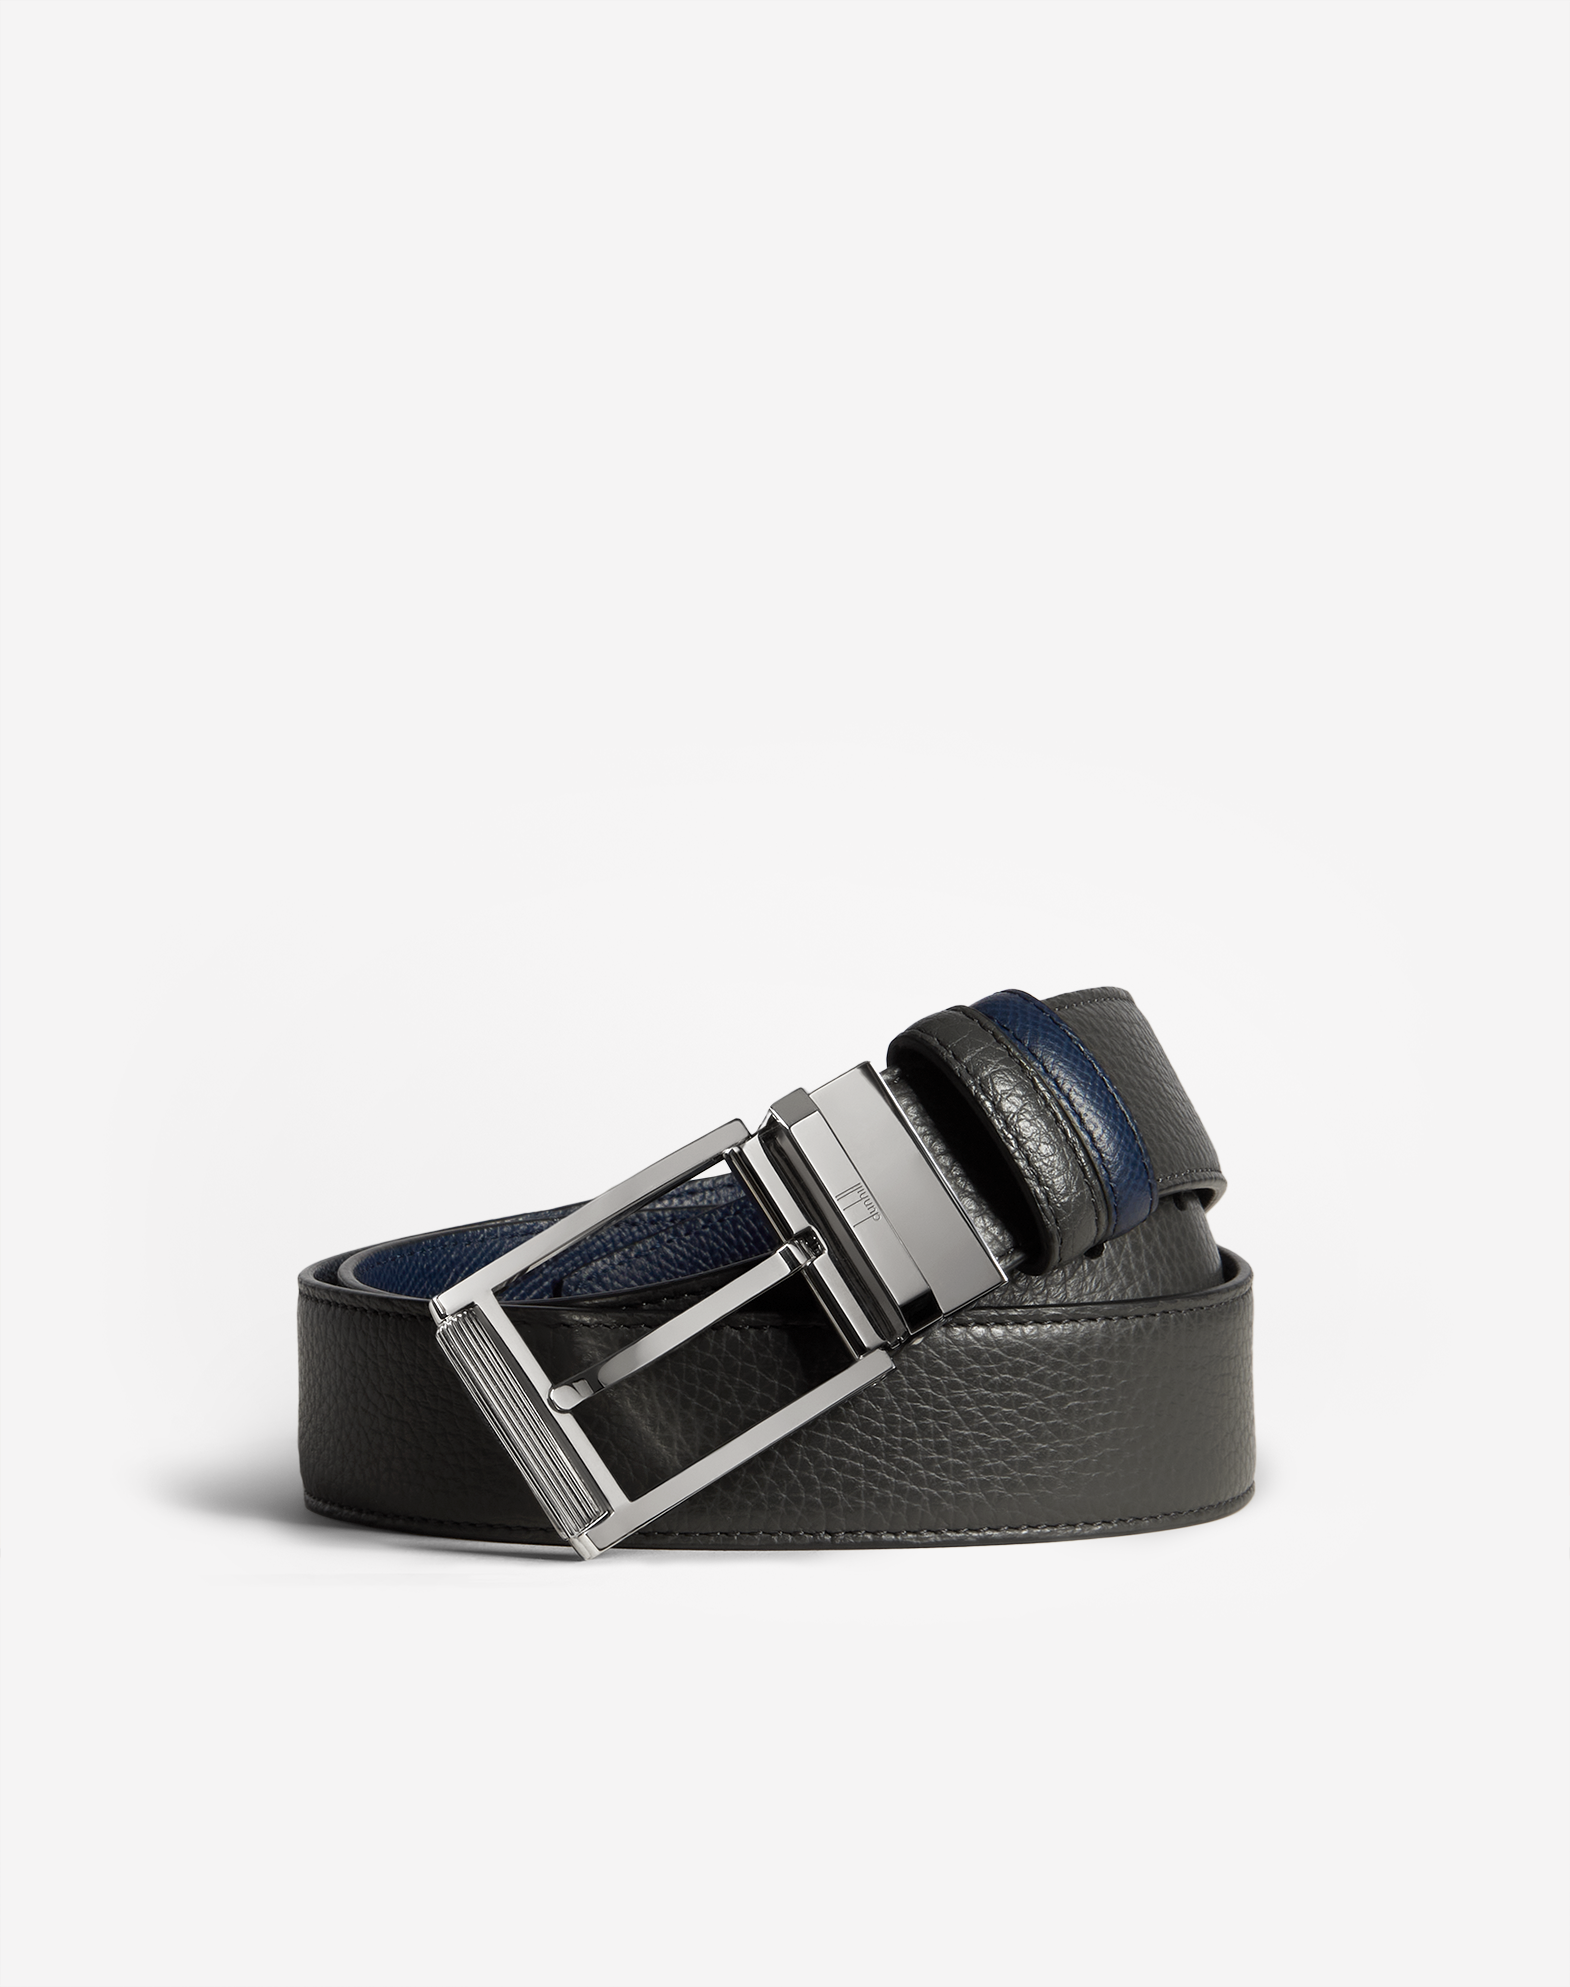 Dunhill Luxury Men's Belts